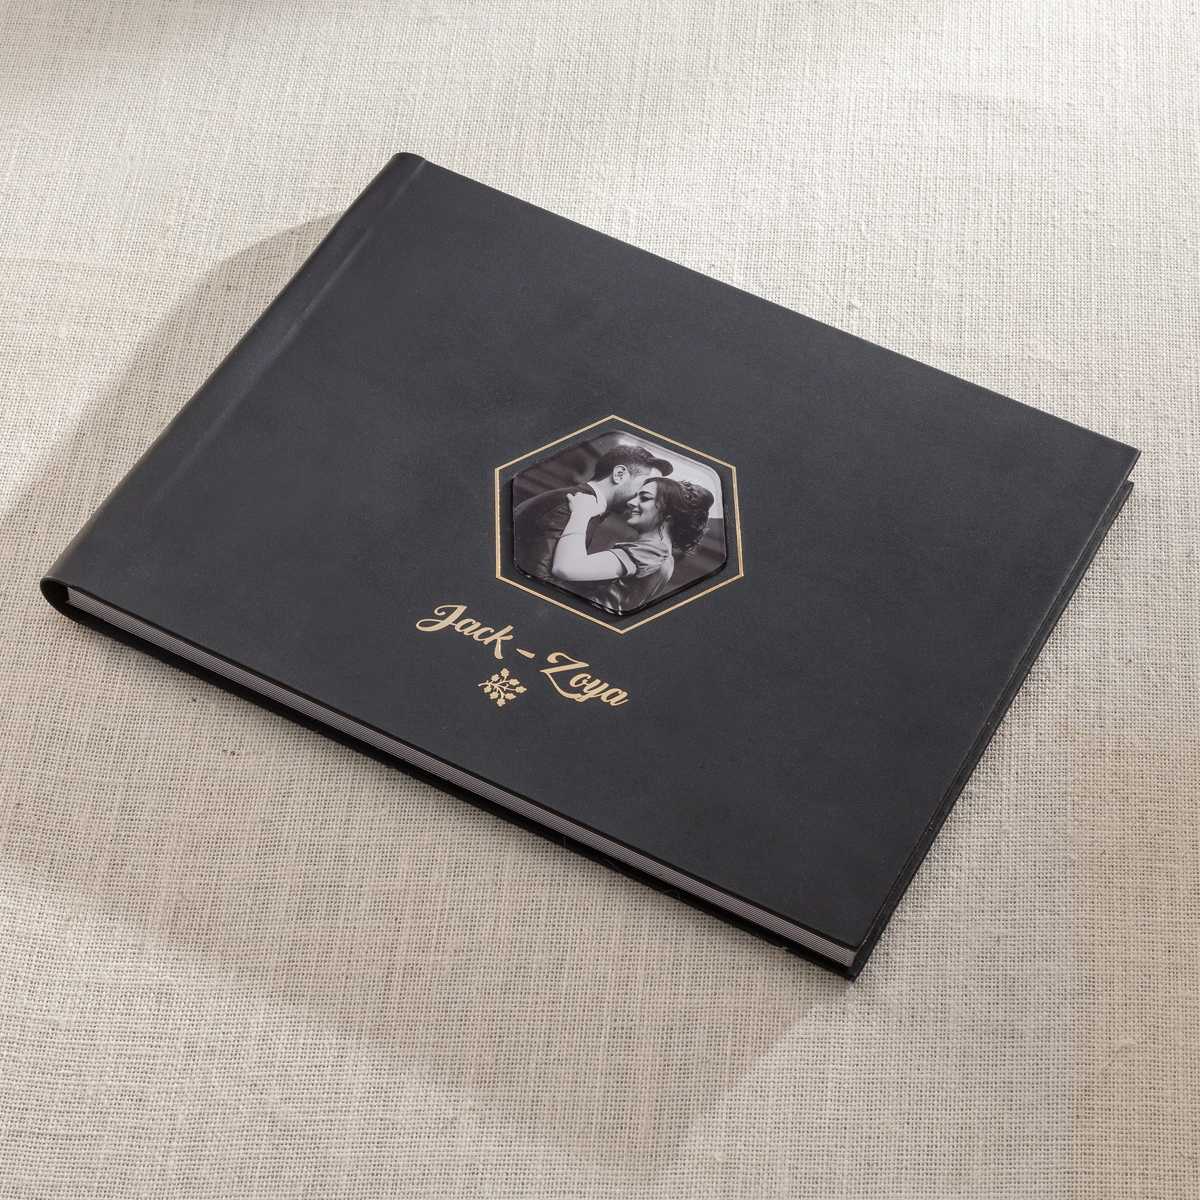 Buy Customised Anniversary Gifts Buy Premium Black Leather Album